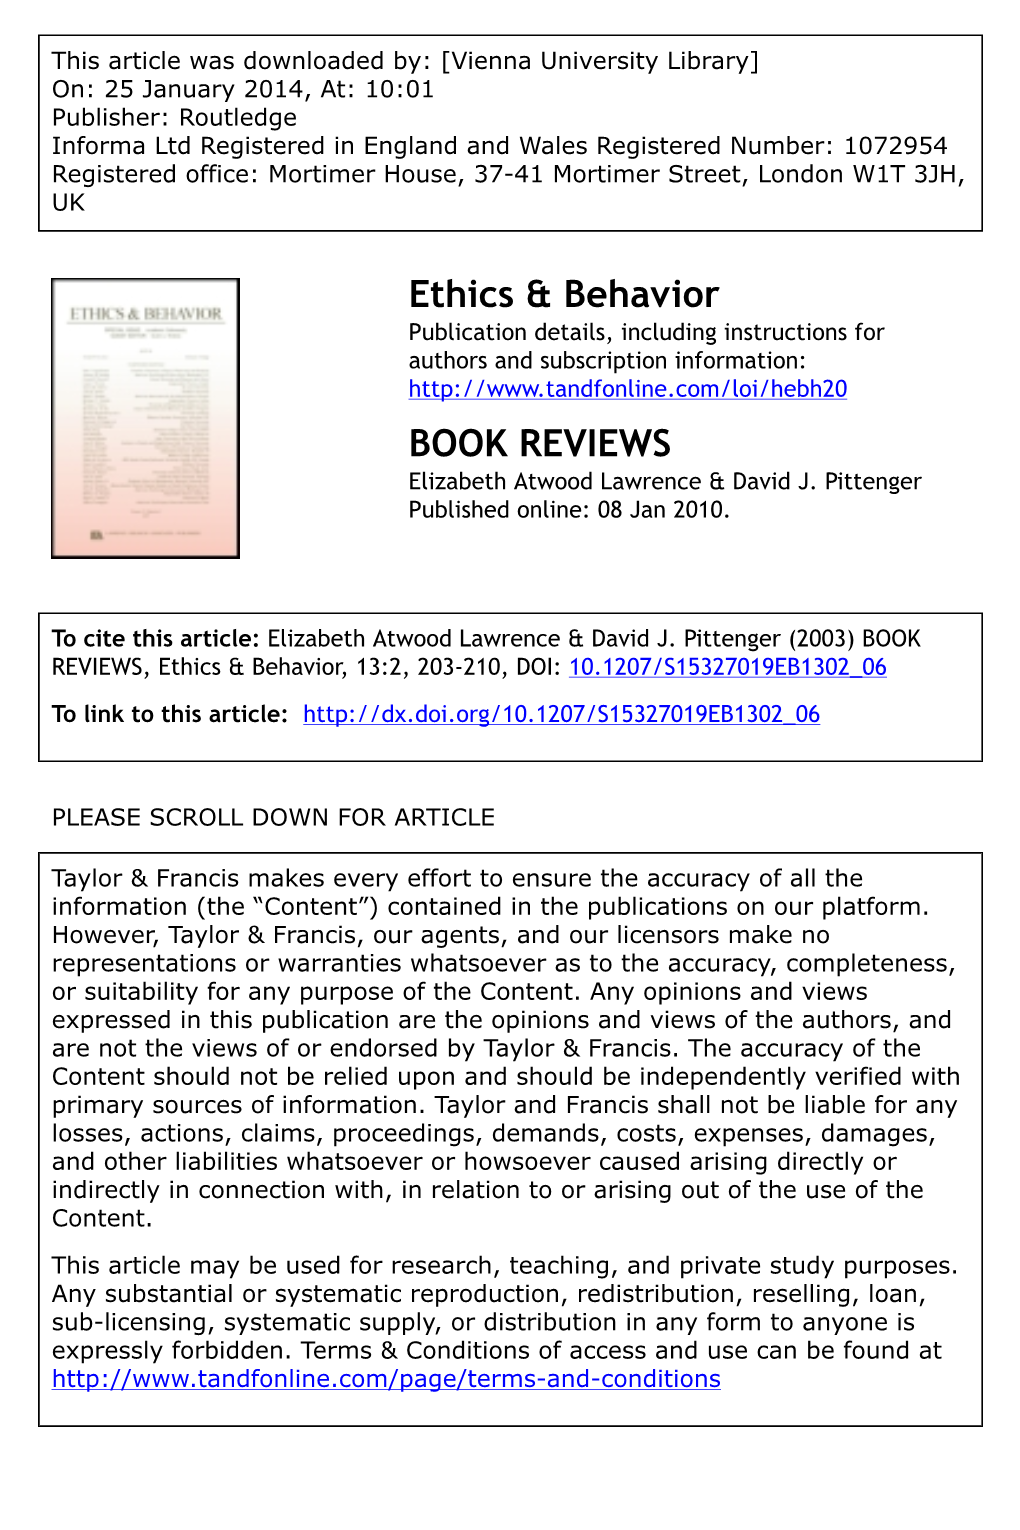 Ethics & Behavior BOOK REVIEWS